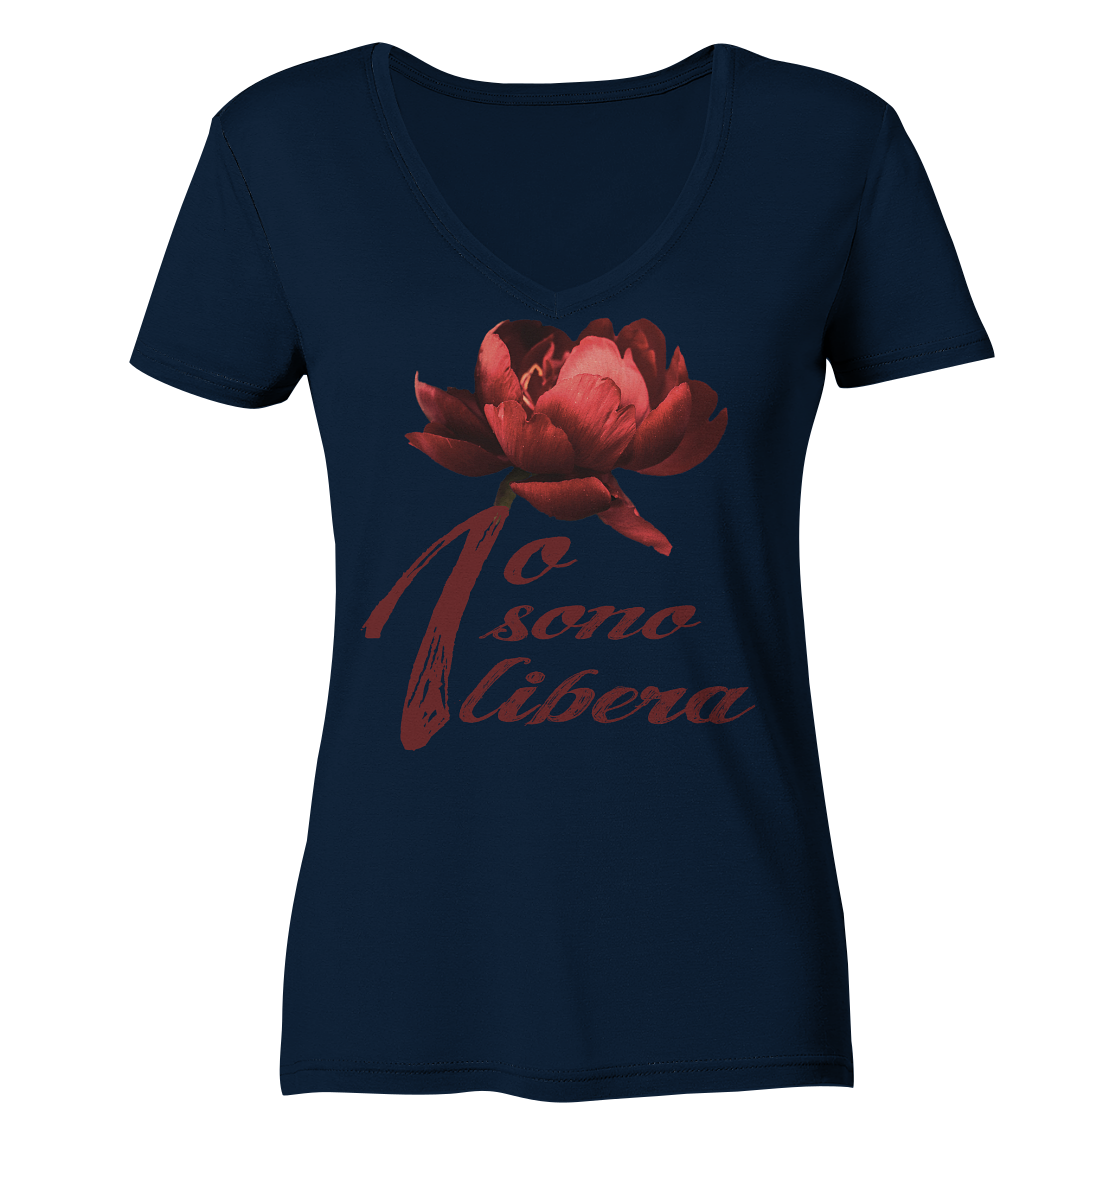 OSA - T shirt cotone biologico donna "Io sono libera" - Ladies V-Neck Shirt